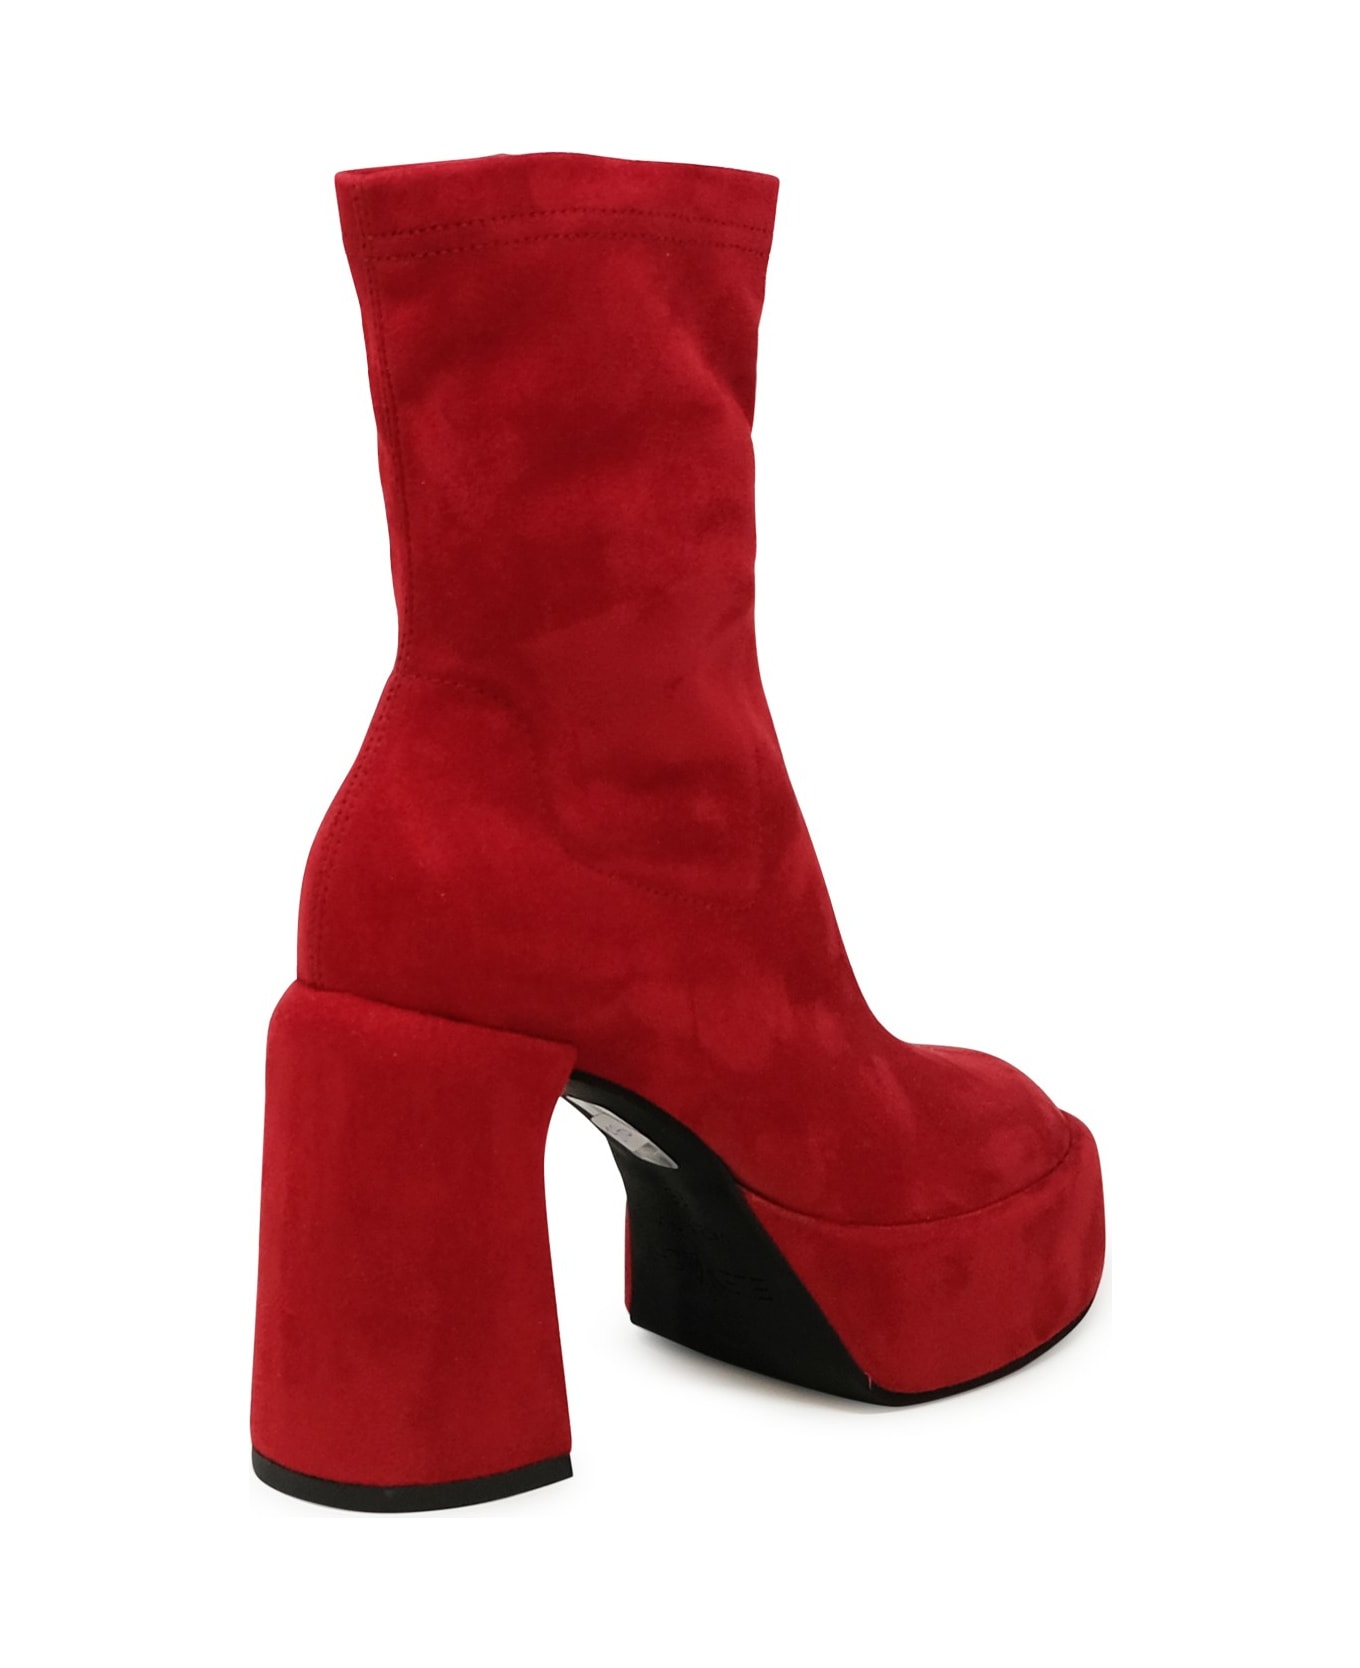 Elena Iachi Ecodaino Zelda Ankle Boots - RED ブーツ